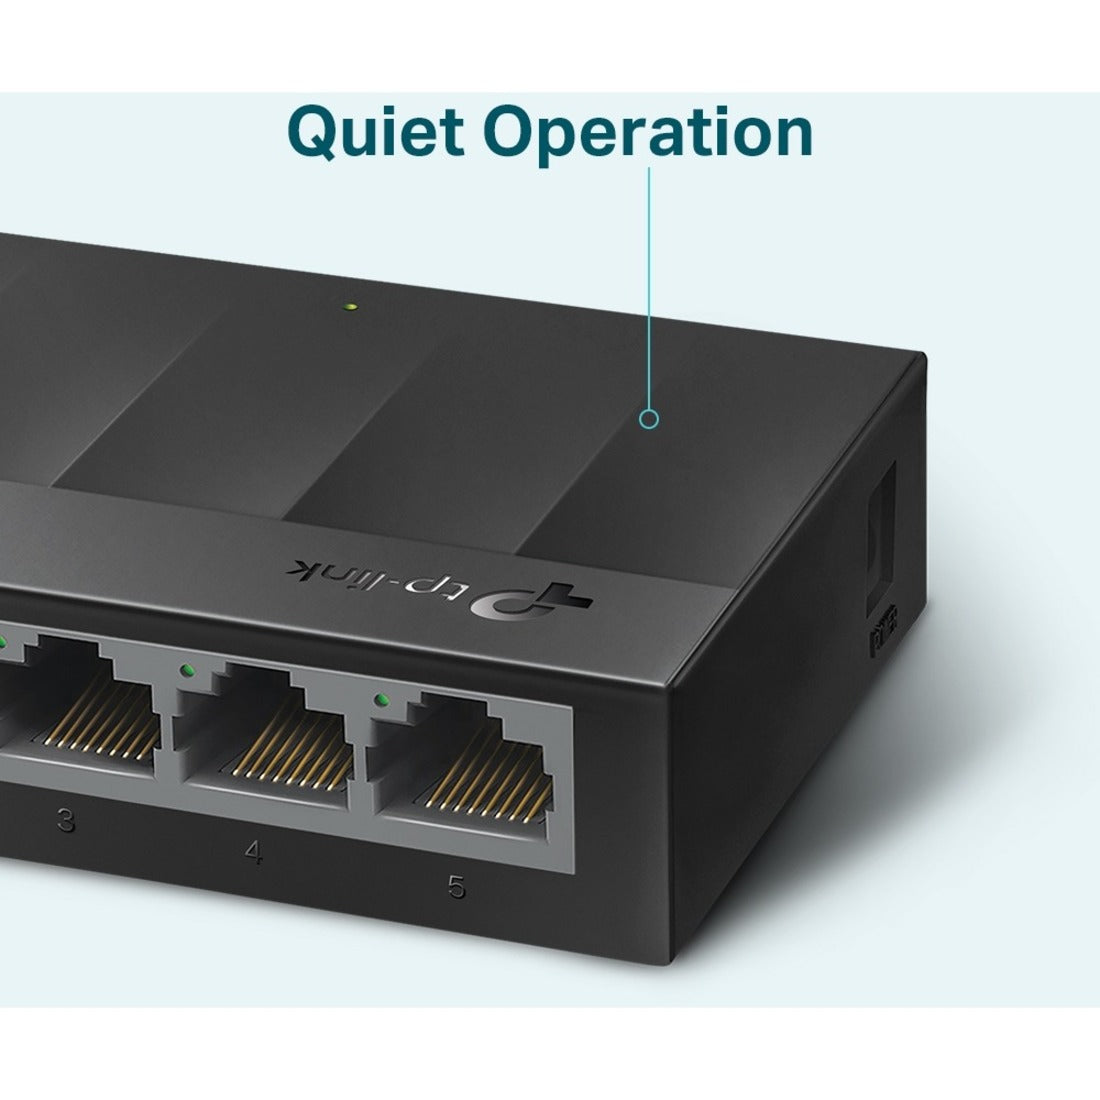 TP-Link LS1005G LiteWave 5-端口 千兆位 以太网 交换机快速 可靠 网络 连接  TP-Link 品牌名称，中译为“普联”